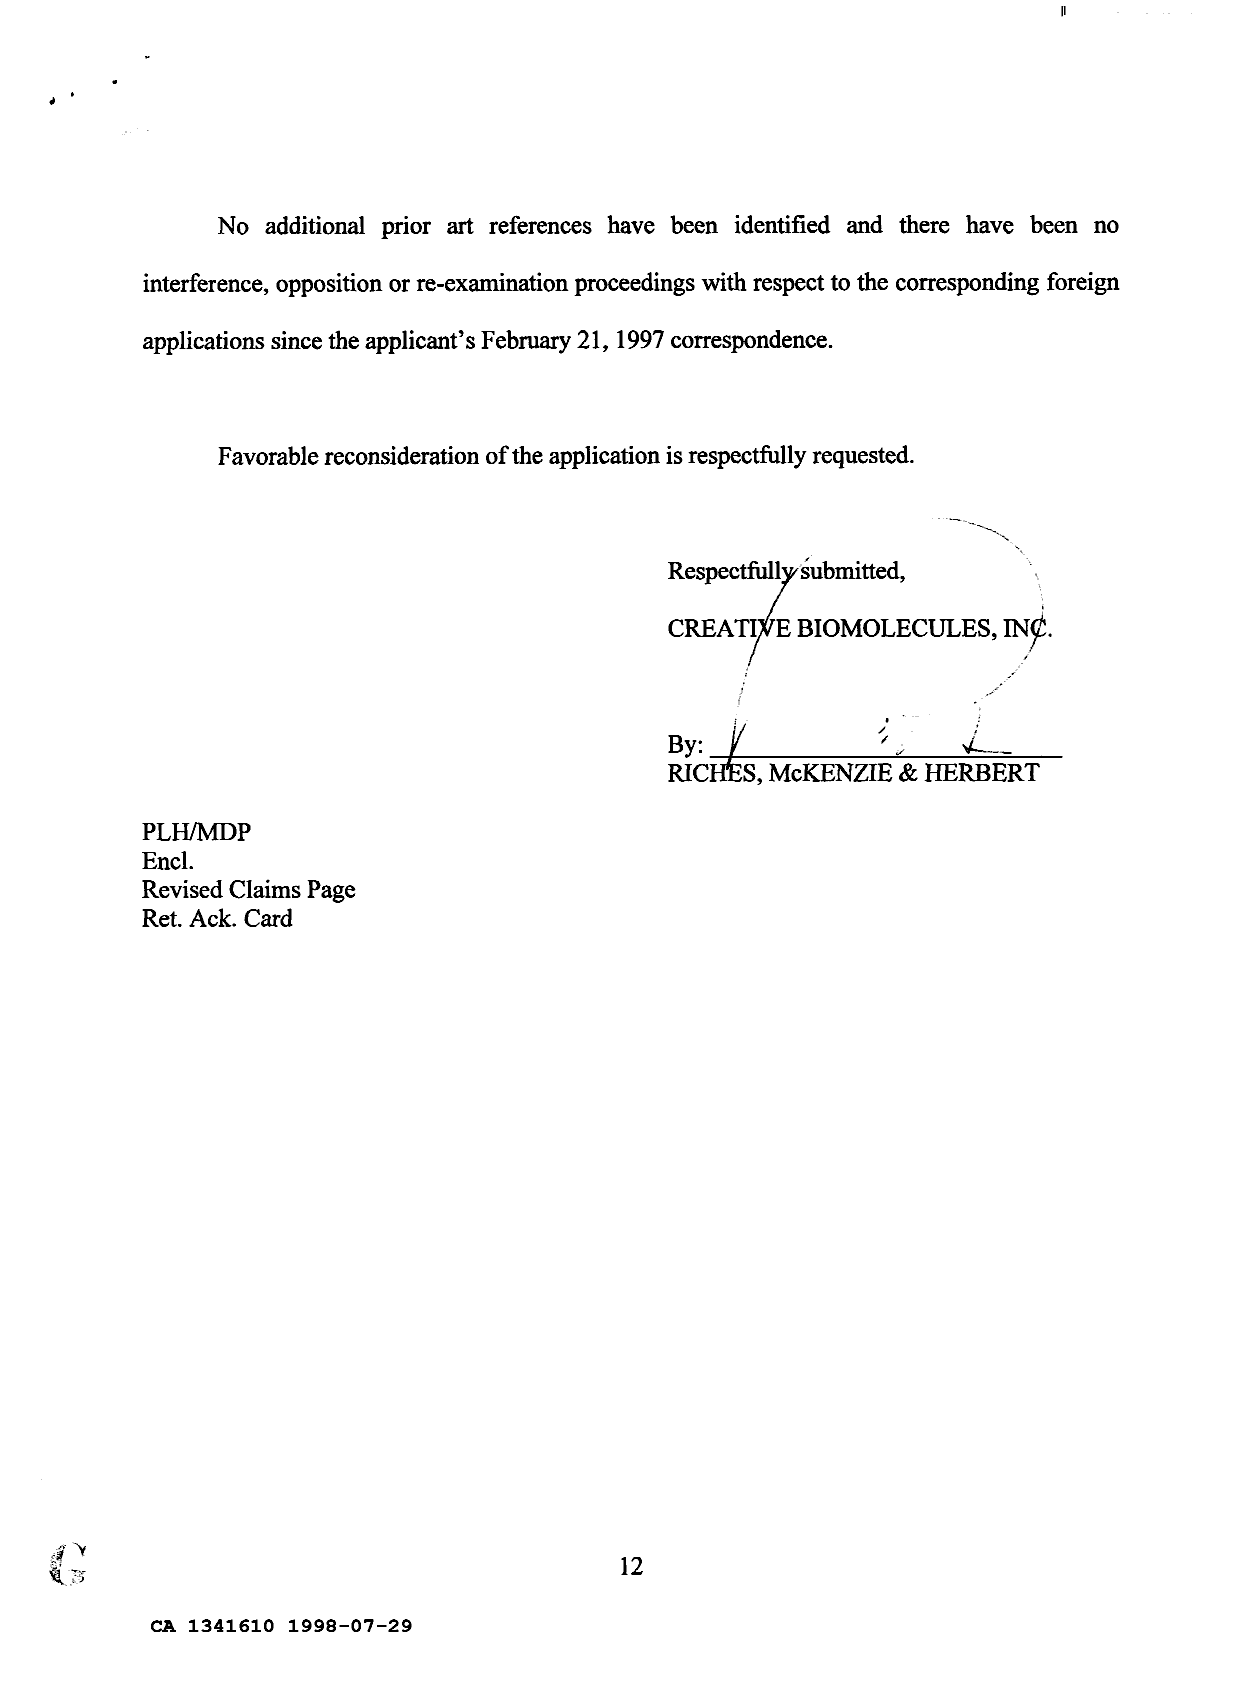 Canadian Patent Document 1341610. Prosecution Correspondence 19980729. Image 12 of 12